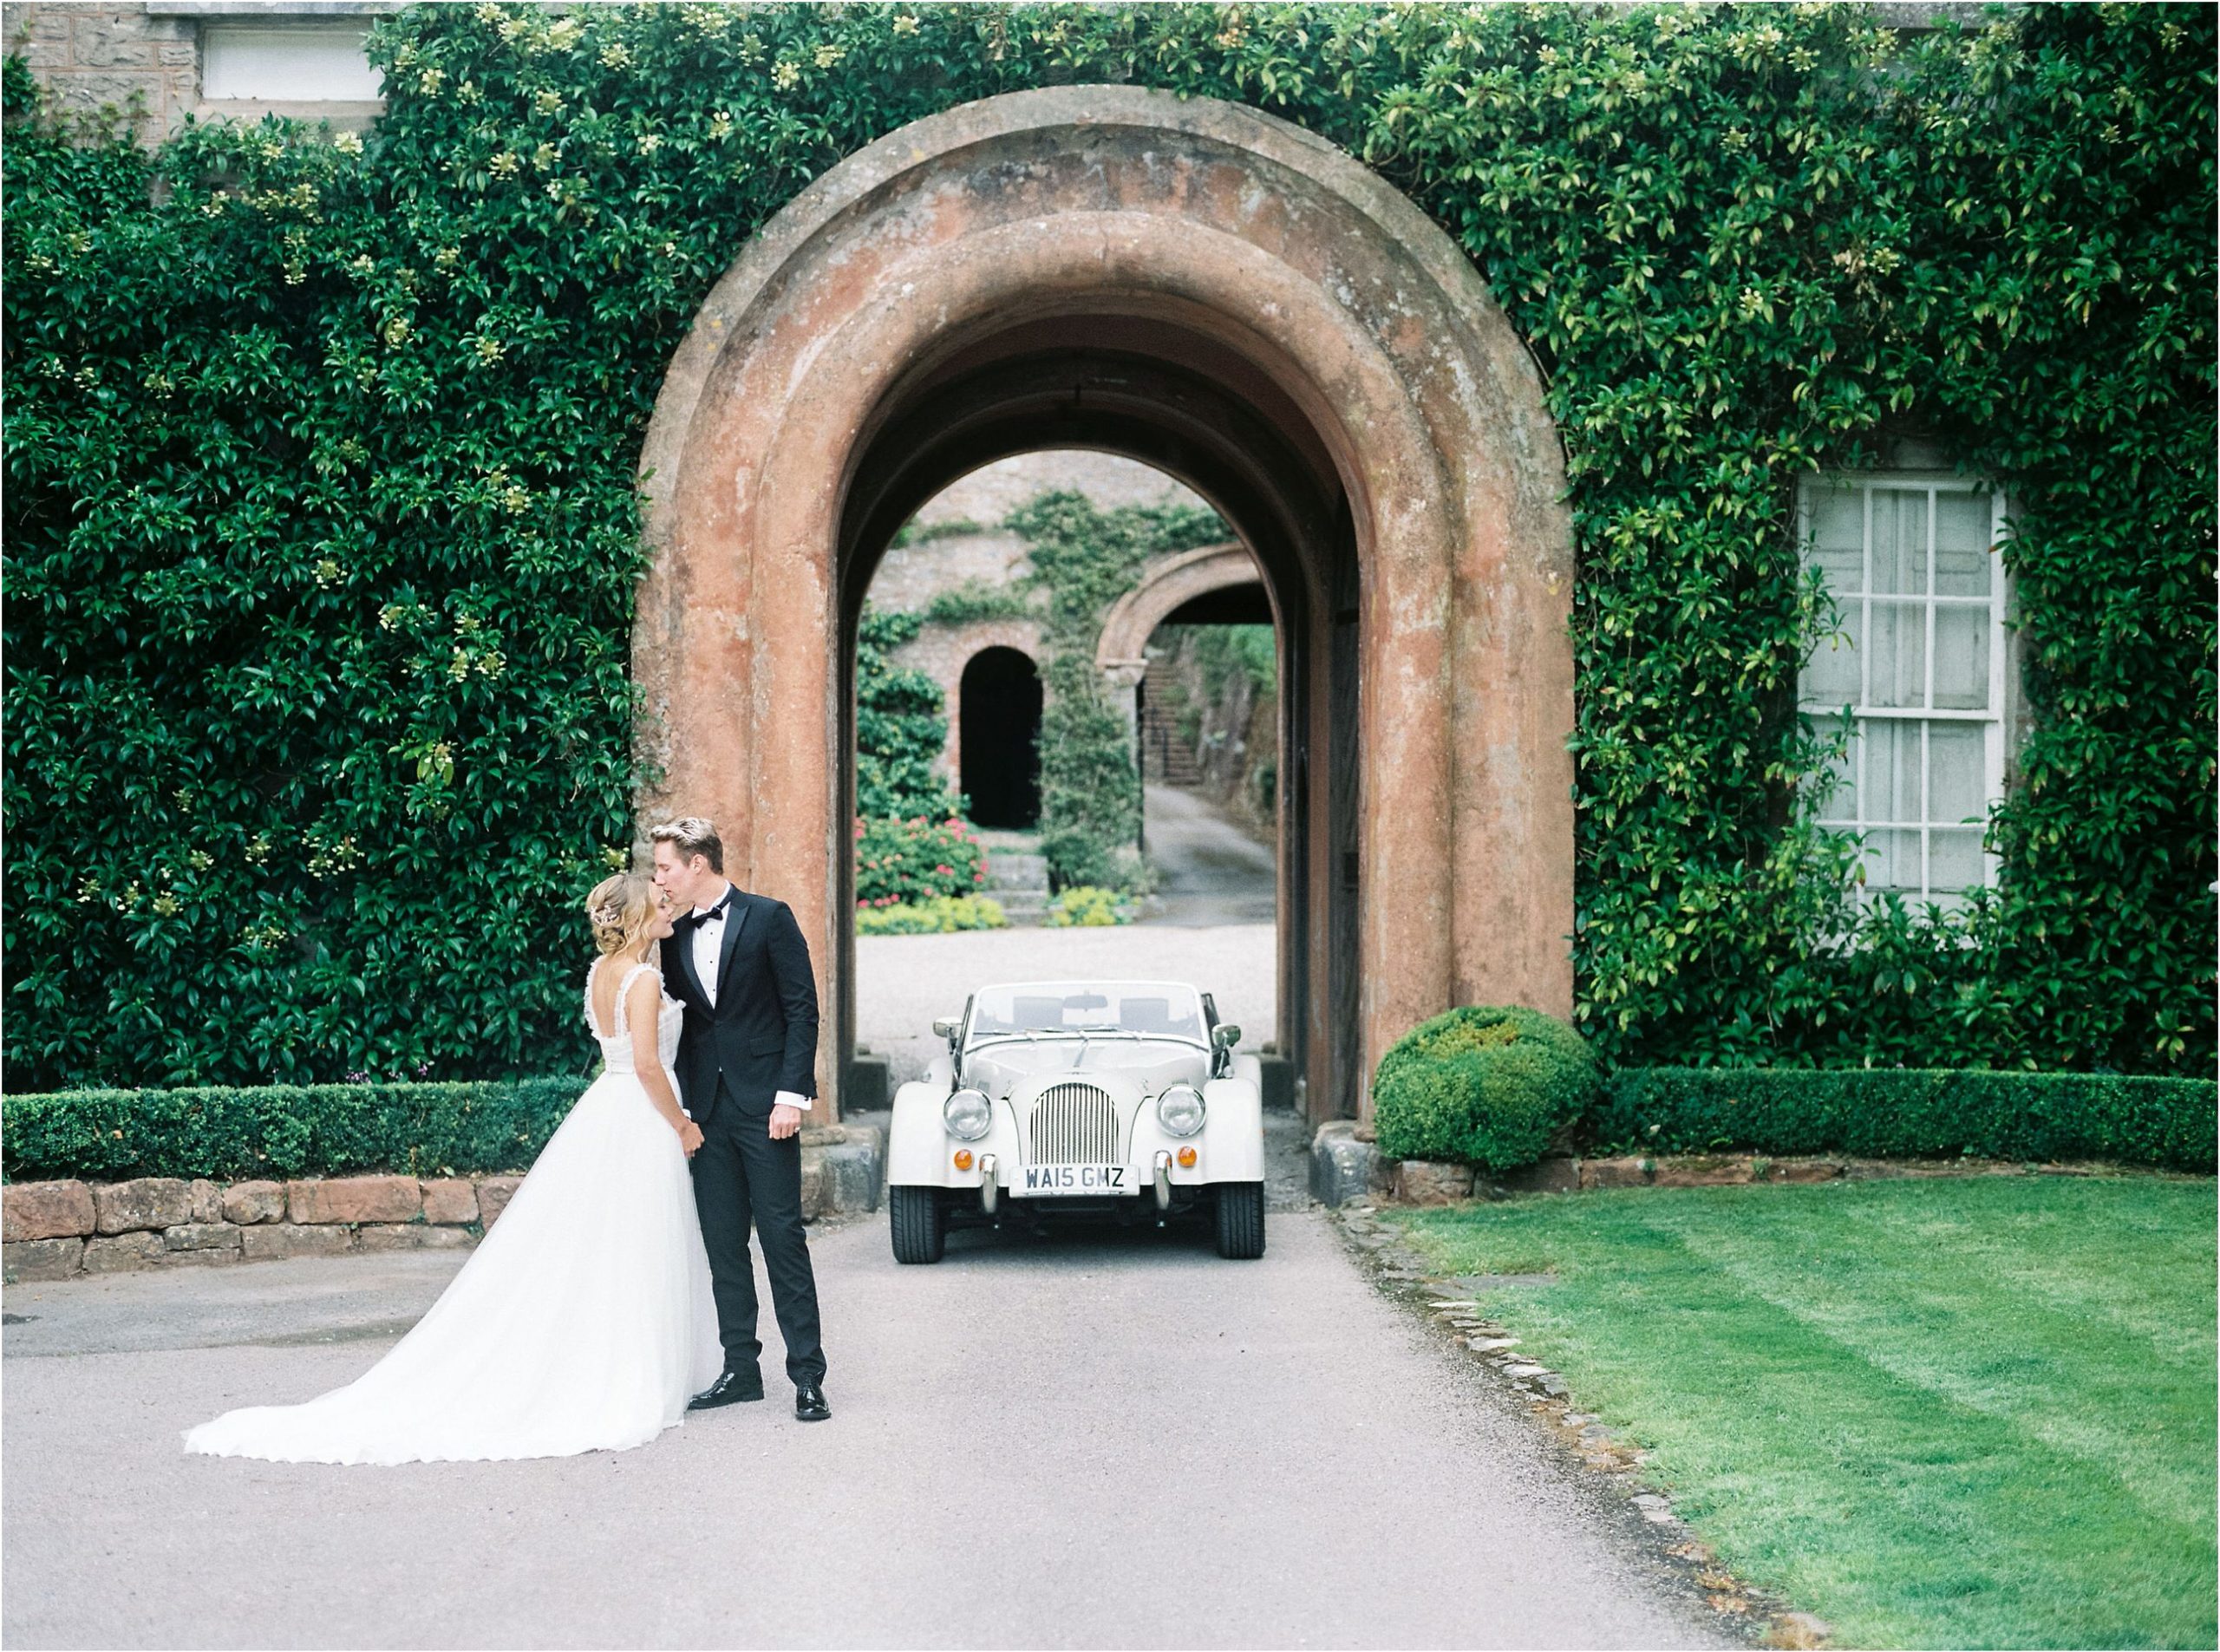 Bride and groom with vintage wedding car